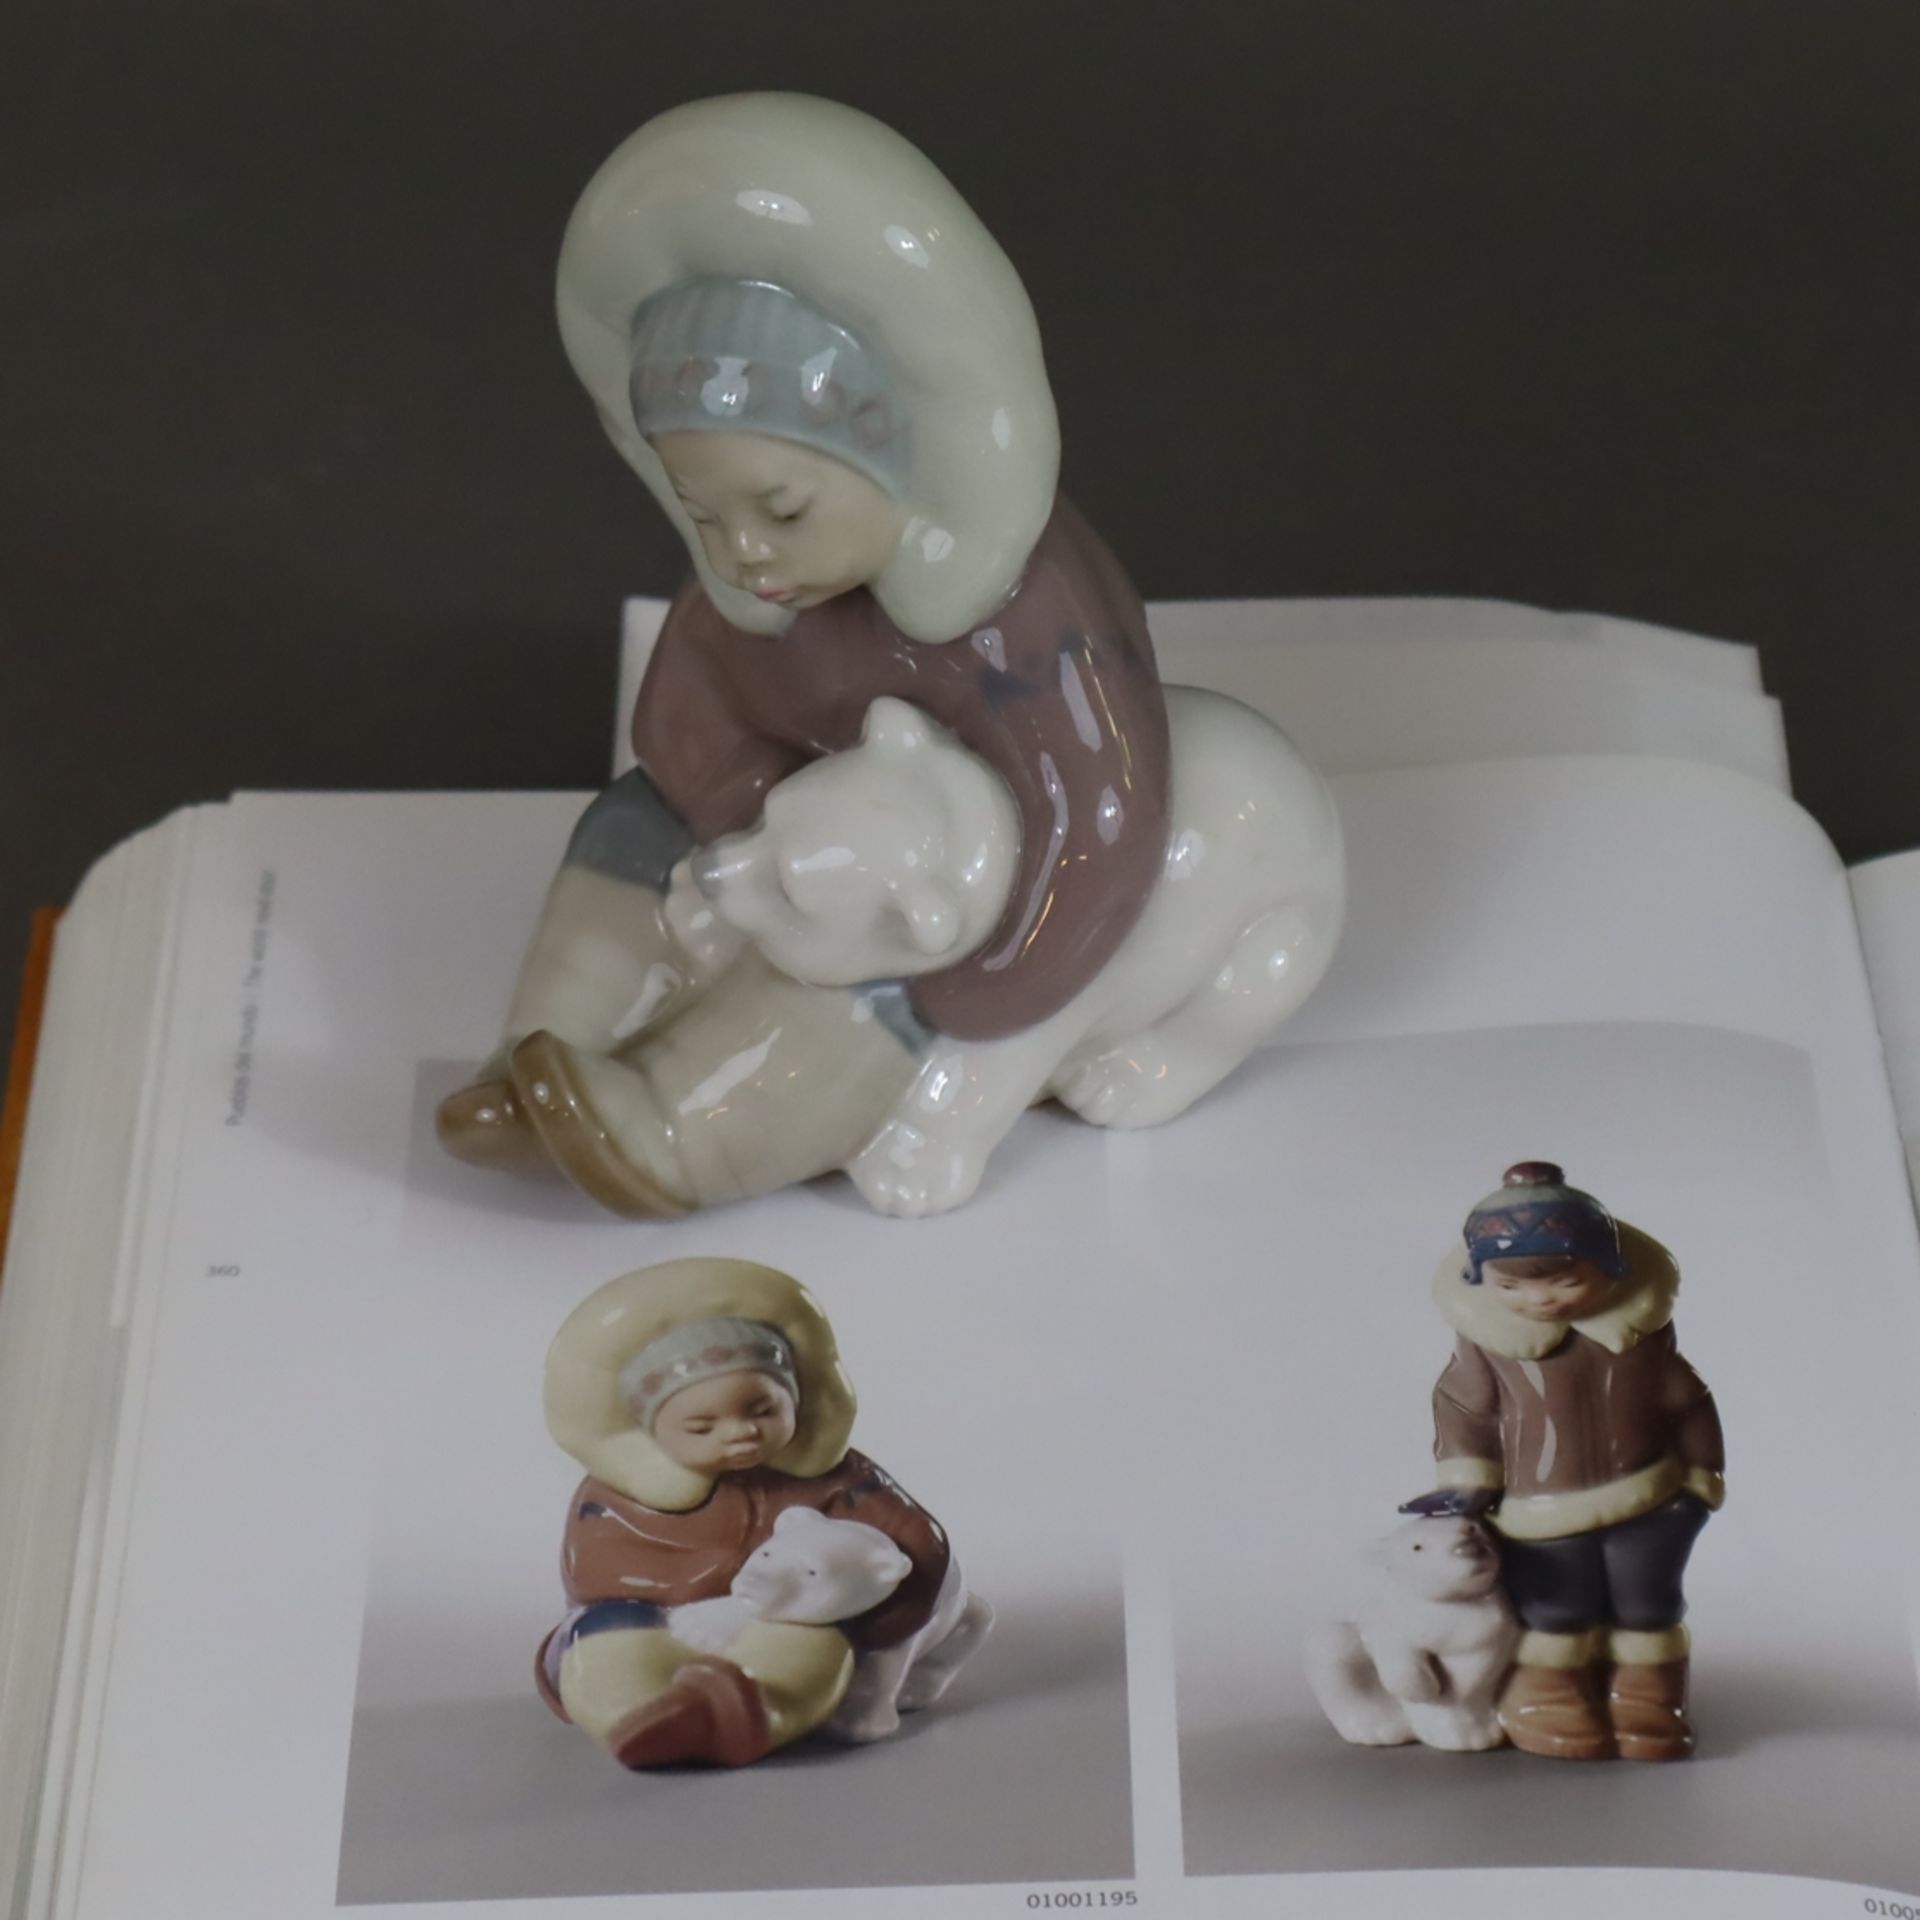 Kinderfigur "Spielendes Inuit-Kind" - Lladro, Spanien, Modellnr. 1195 (Produktion 2007 eingestellt) - Image 6 of 6